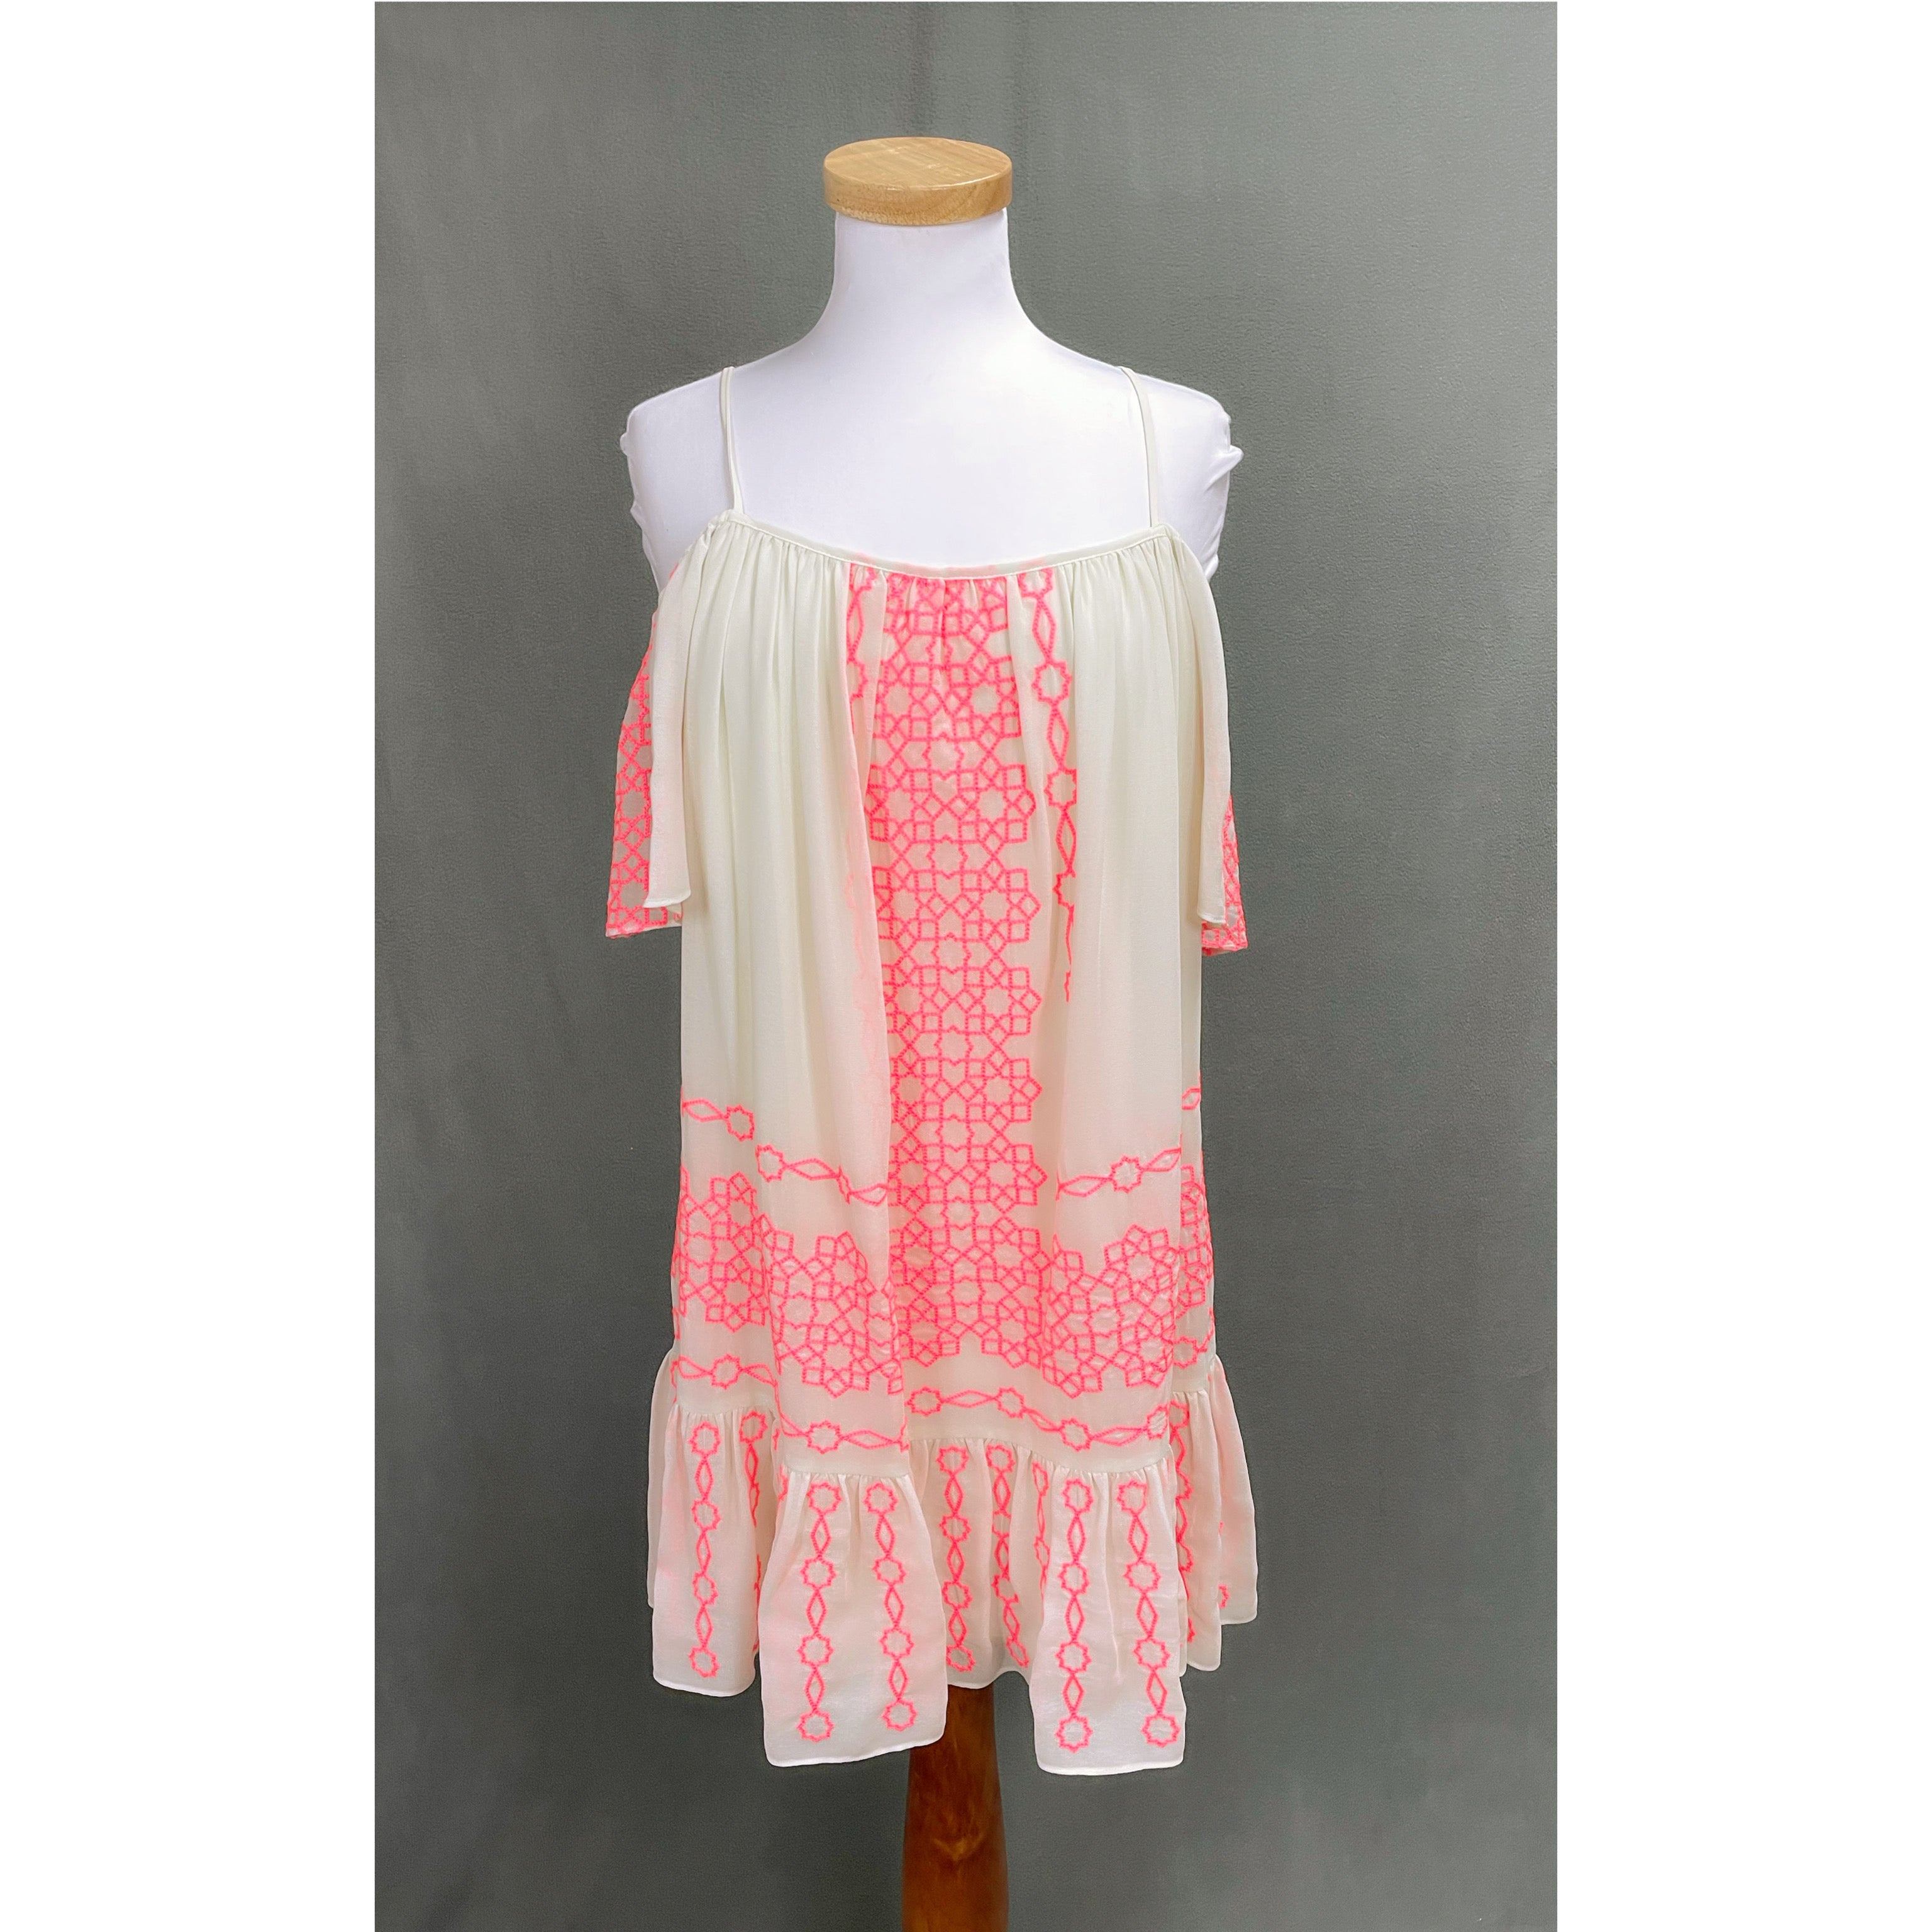 Amanda Uprichard cream and neon pink dress, size S